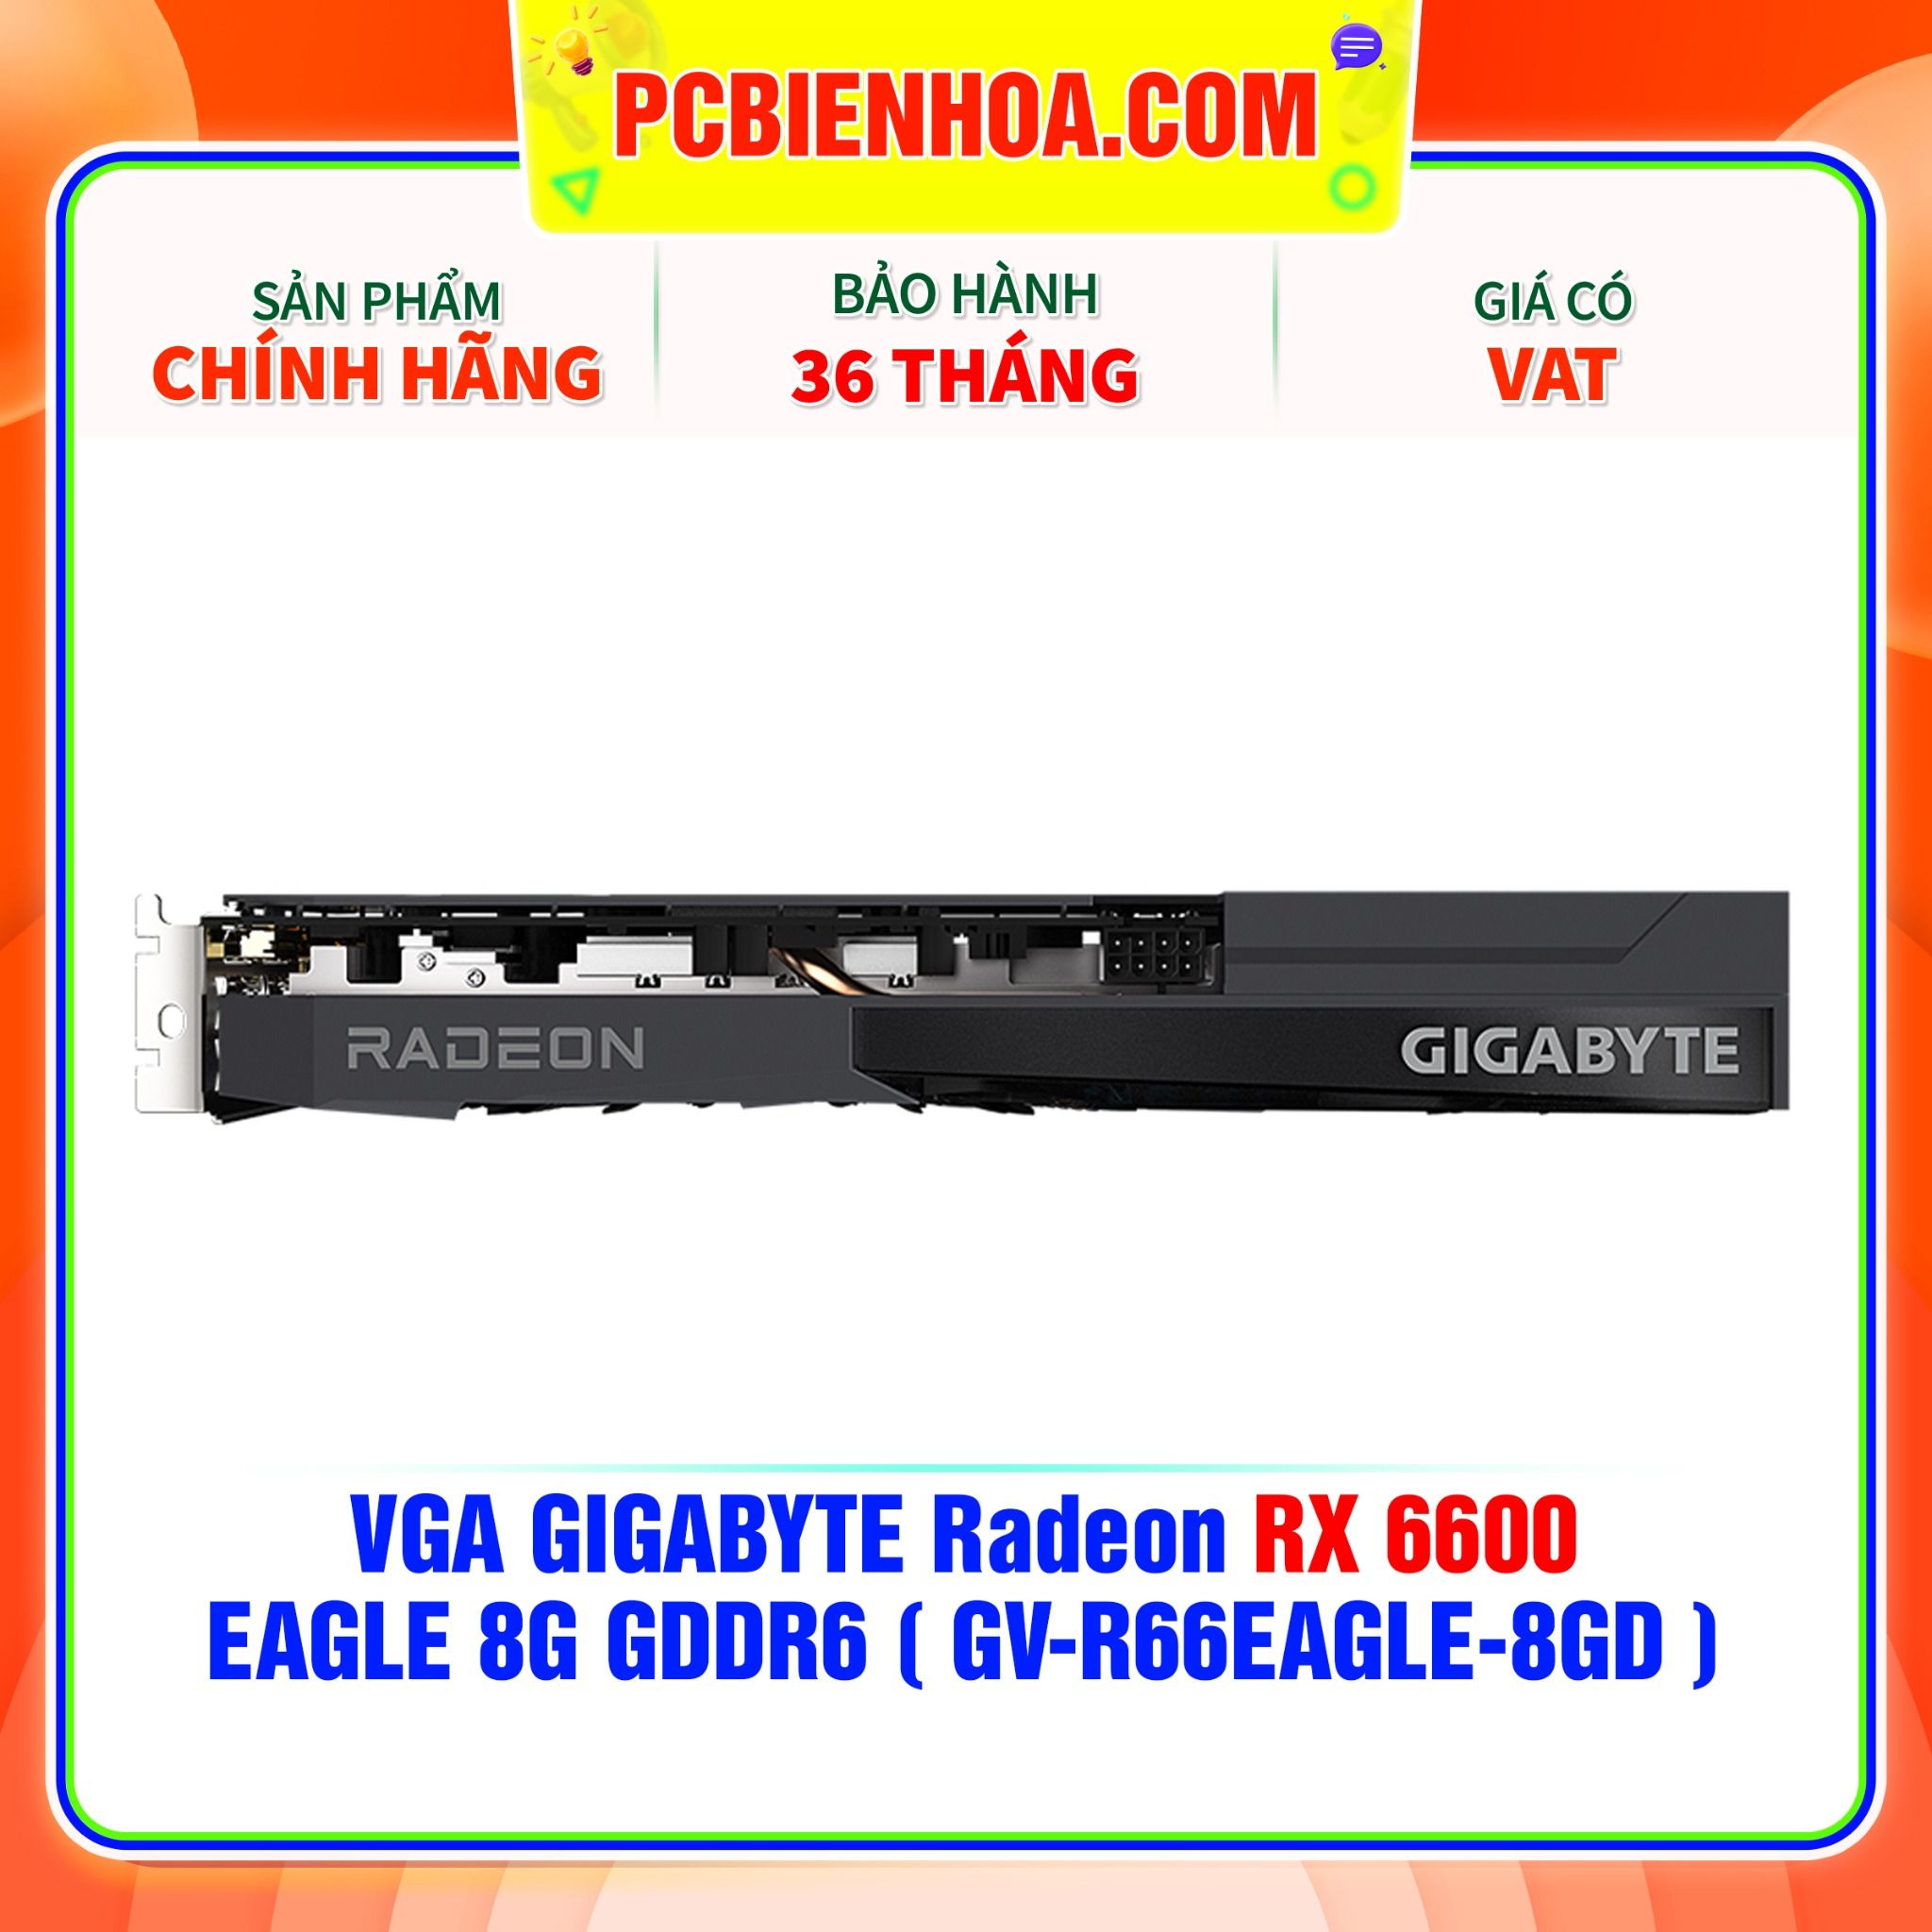  VGA GIGABYTE Radeon RX 6600 EAGLE 8G GDDR6 ( GV-R66EAGLE-8GD ) 